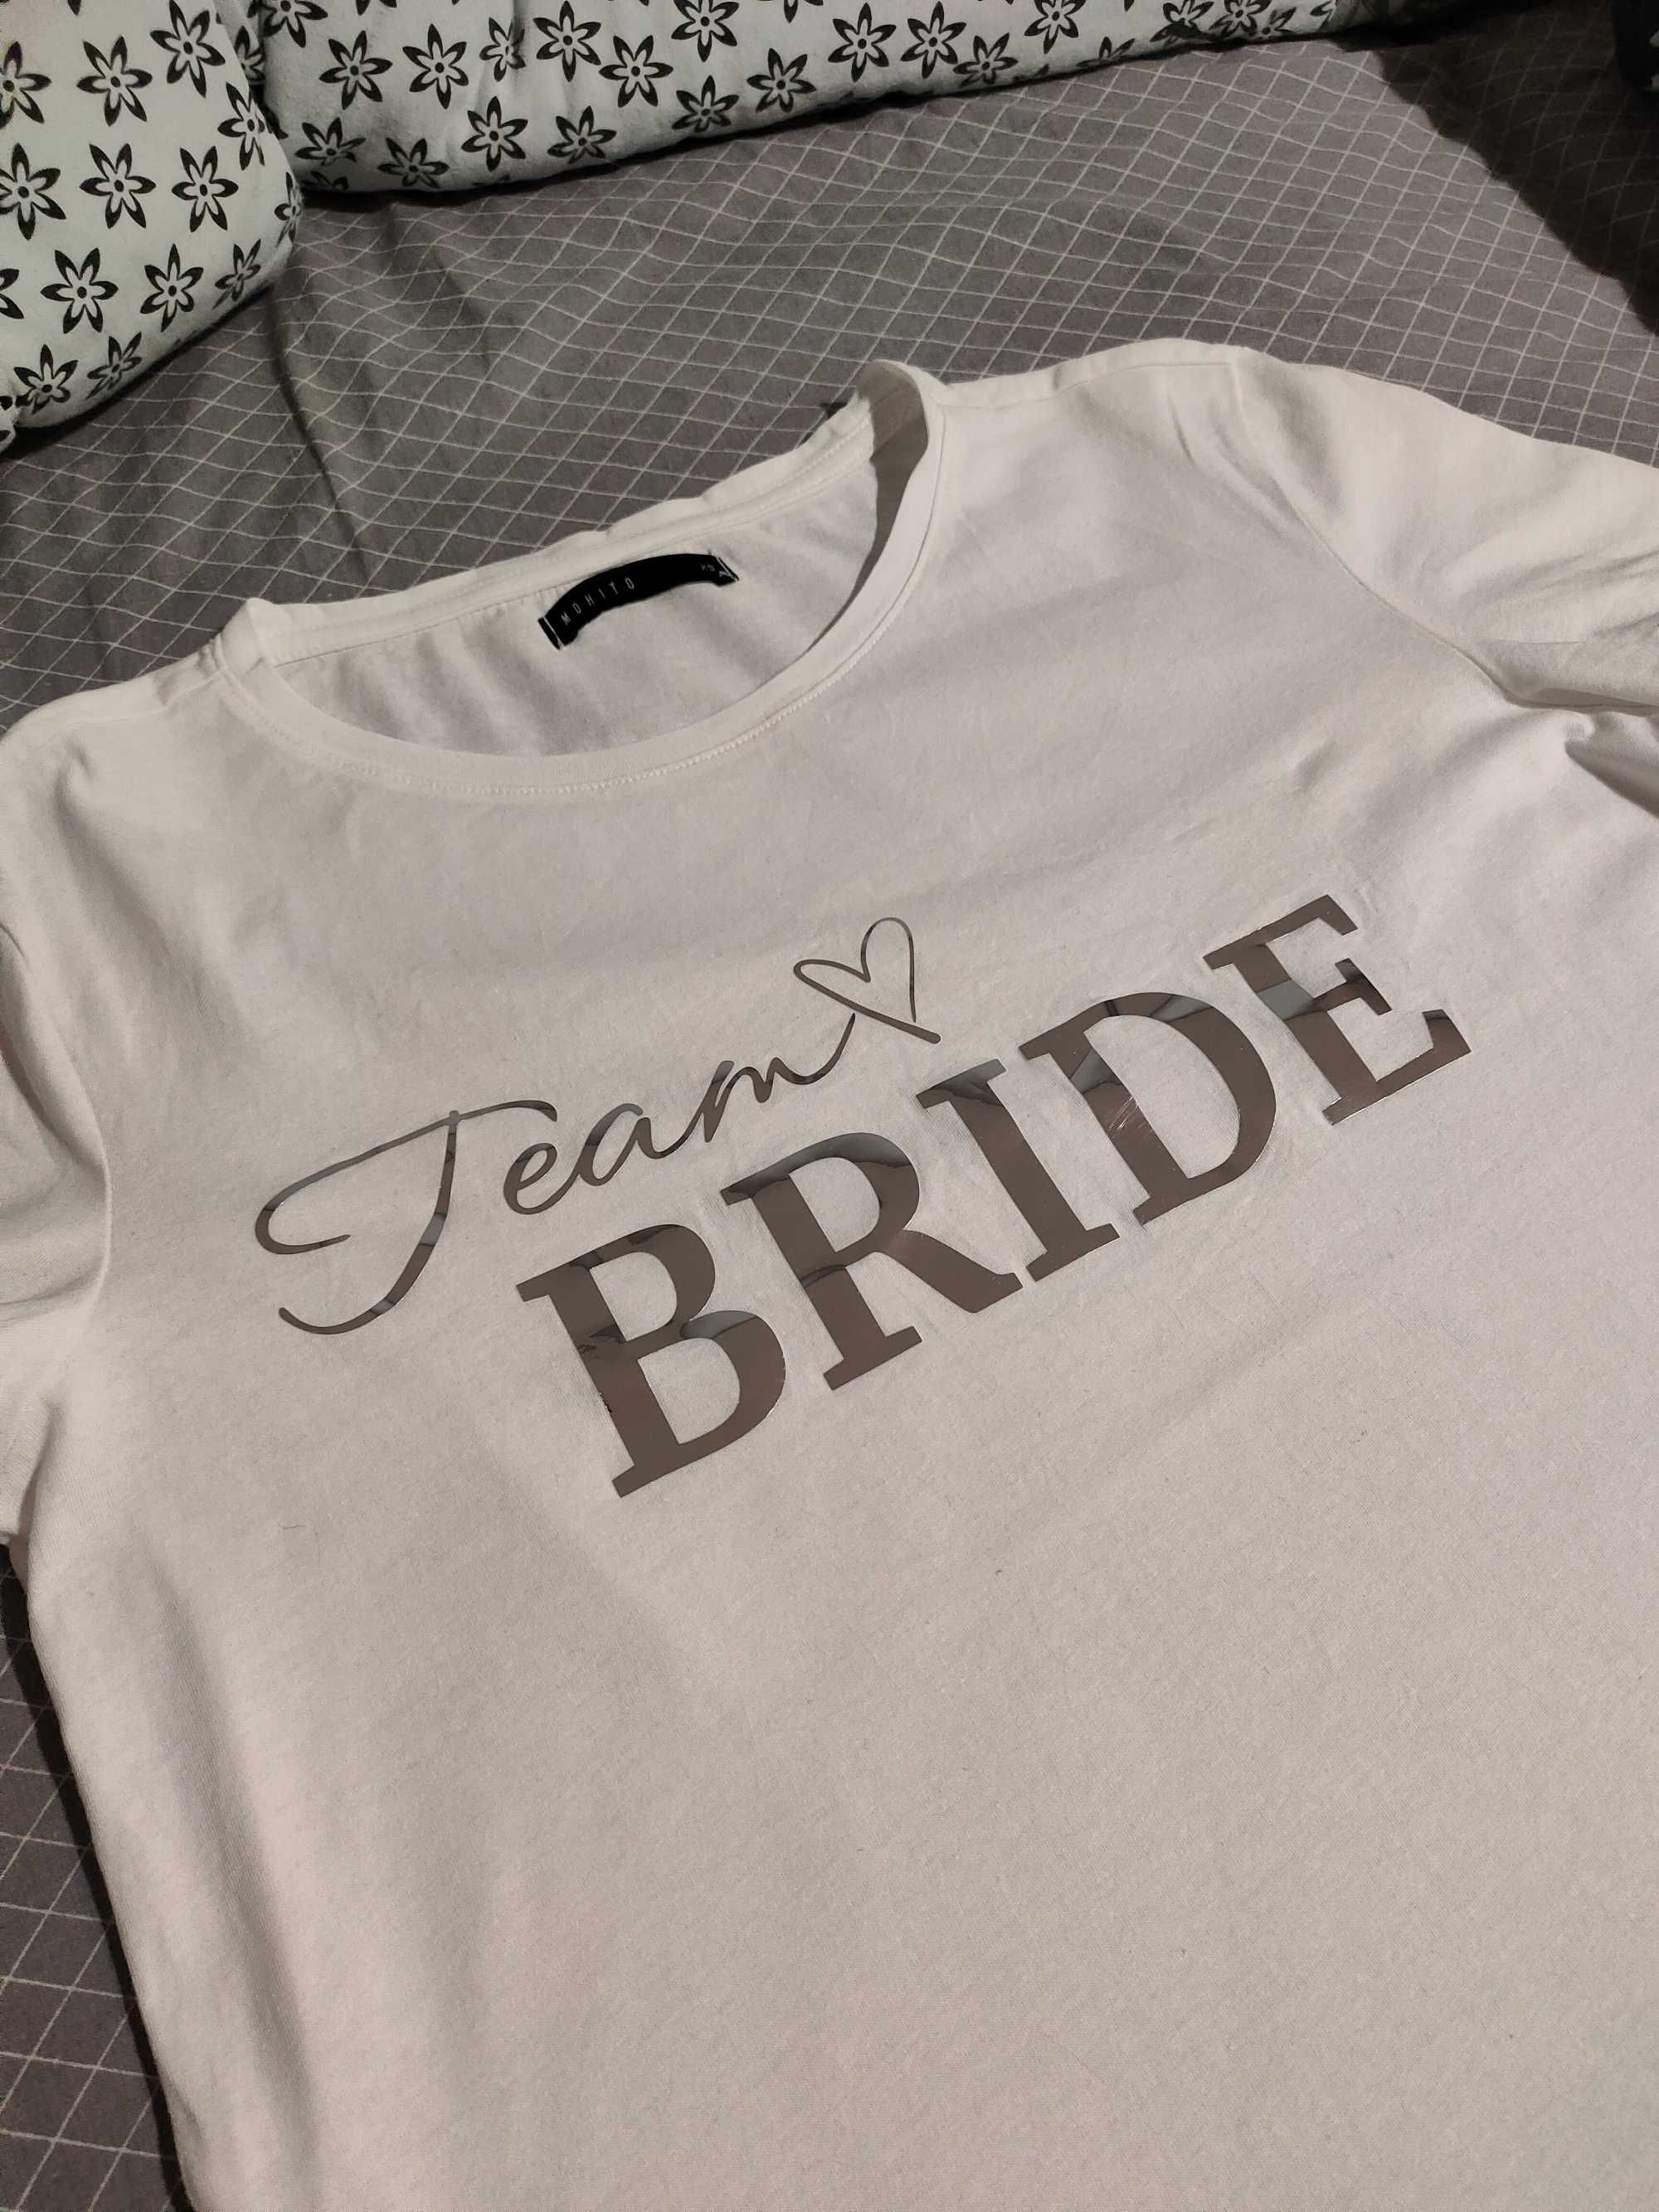 Biała bluzka t-shirt na wieczór panieński Bride team srebro napis